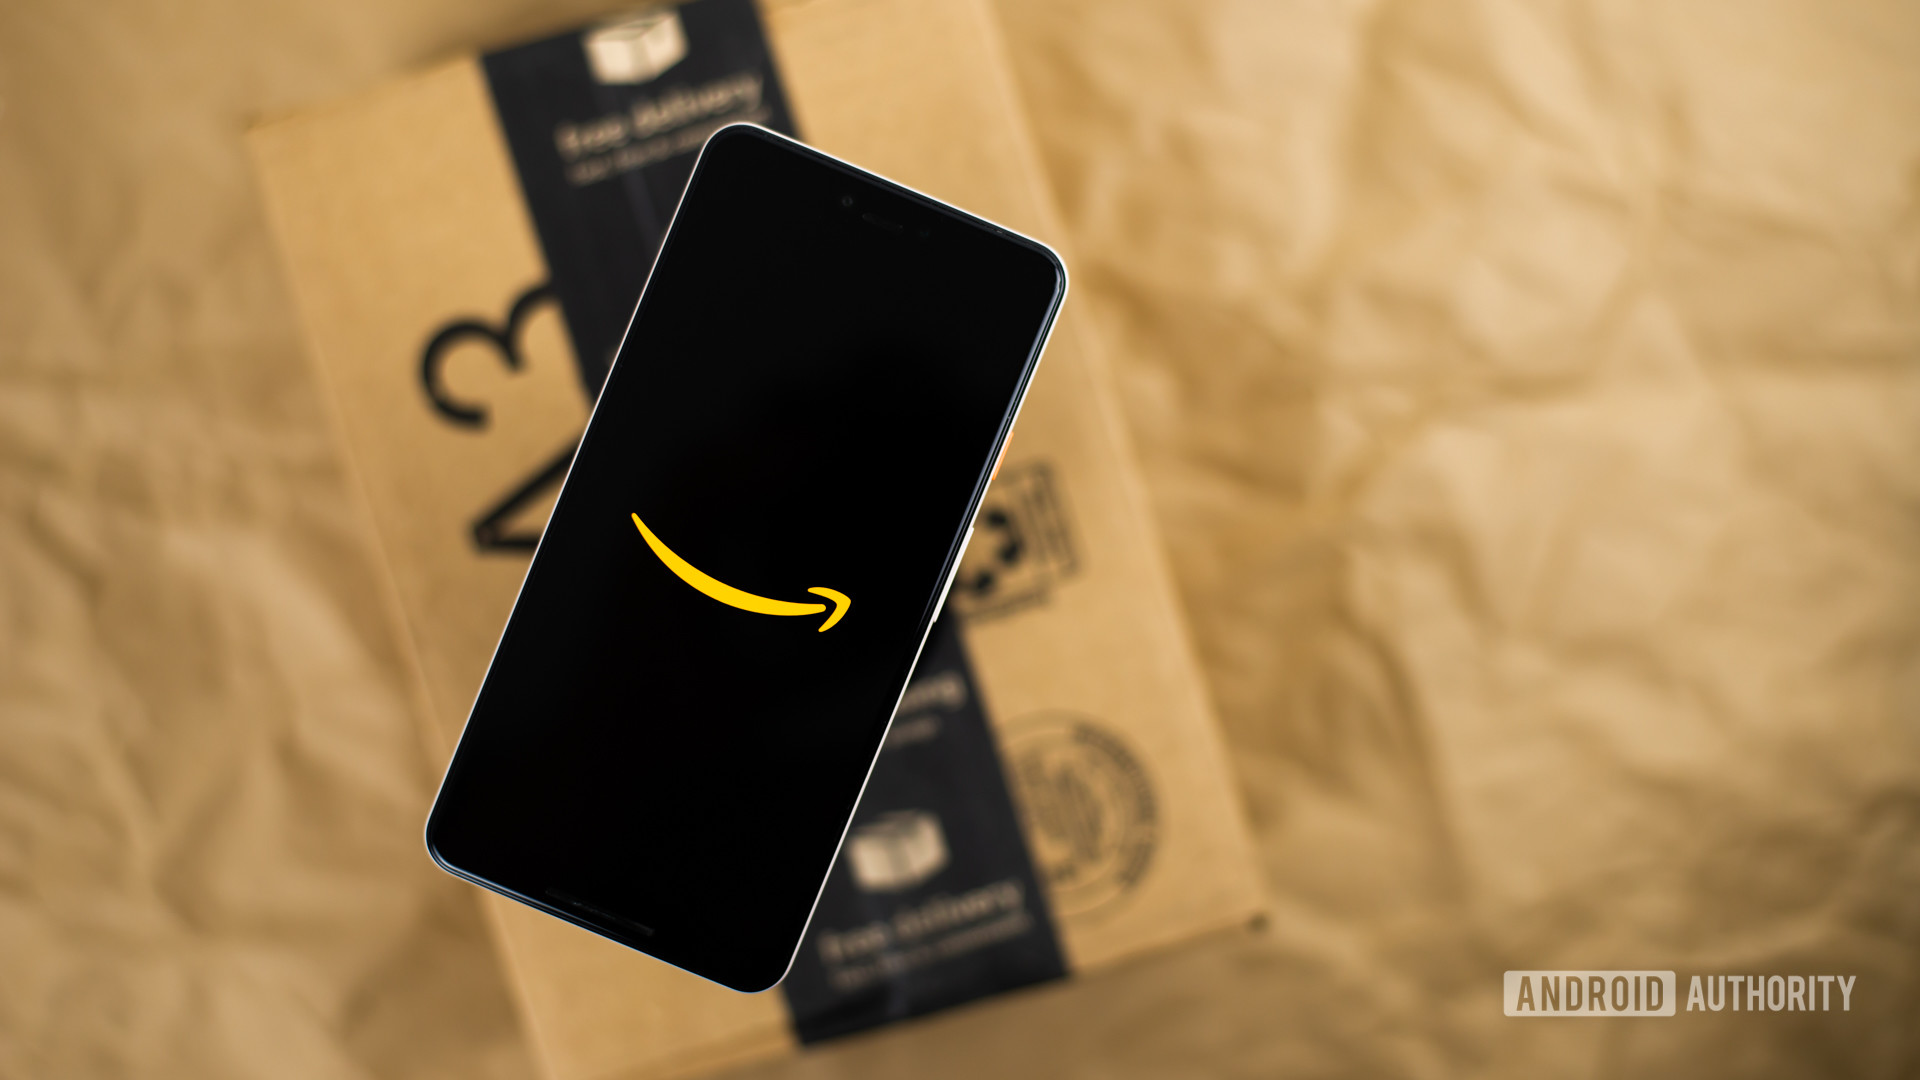 Amazon stock photo 4 - Unlocked phones